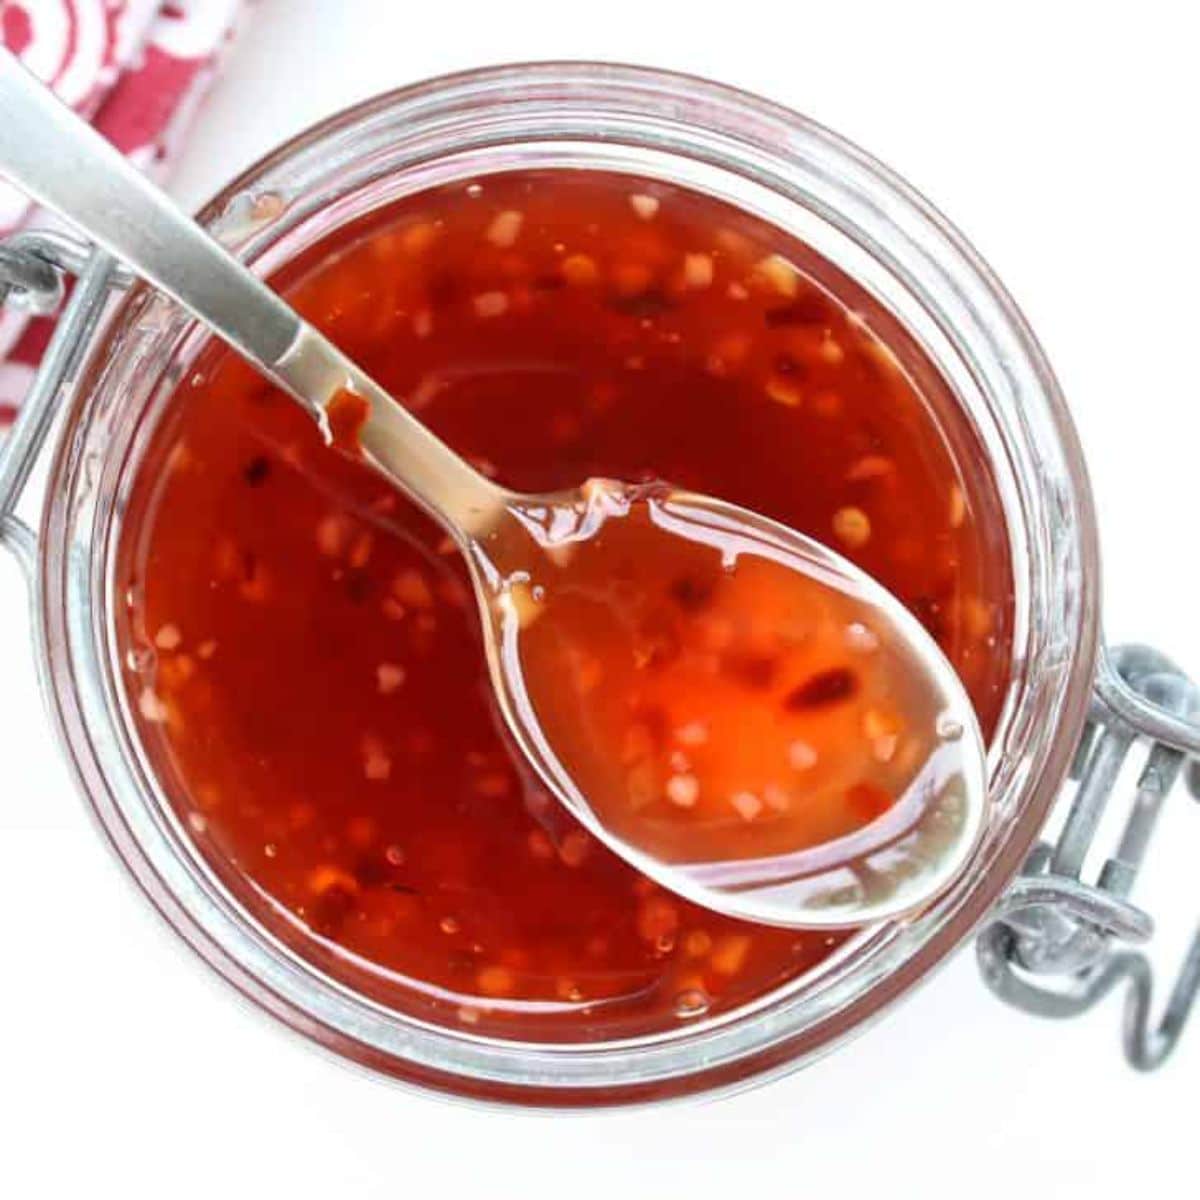 Sweet Chili Thai Hot Sauce in a glass jar.